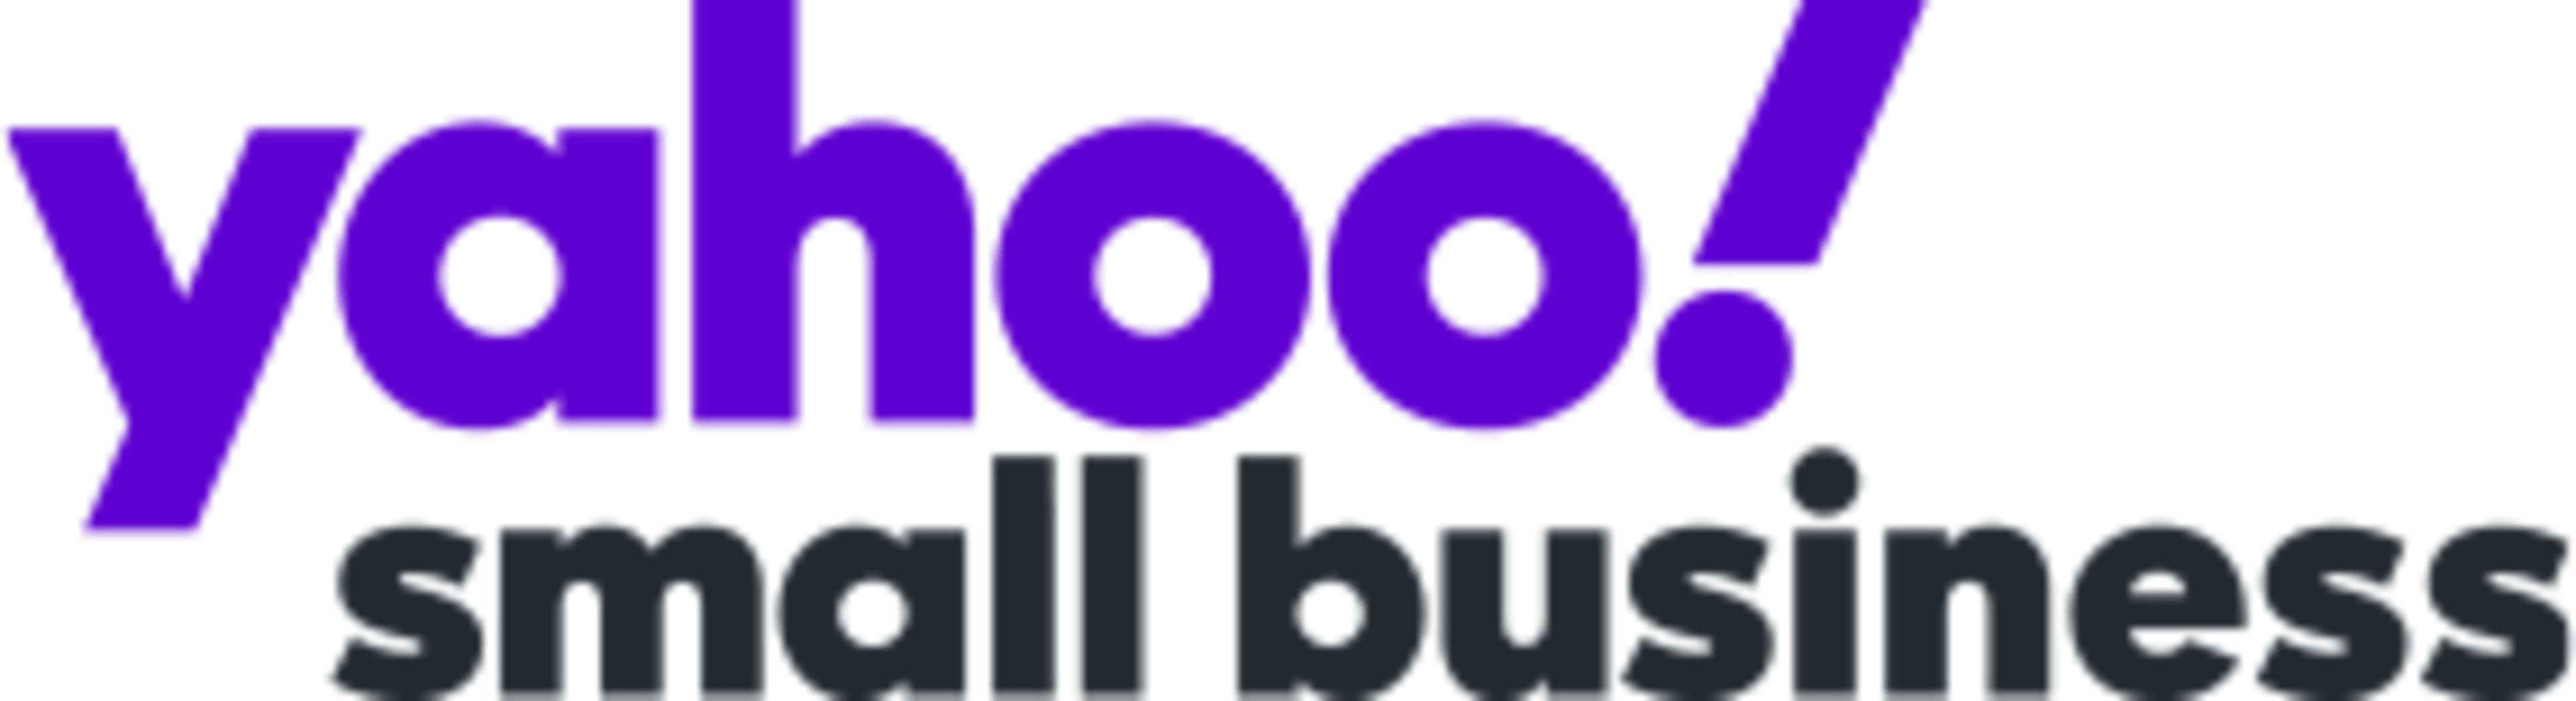 Yahoo Small Business Code